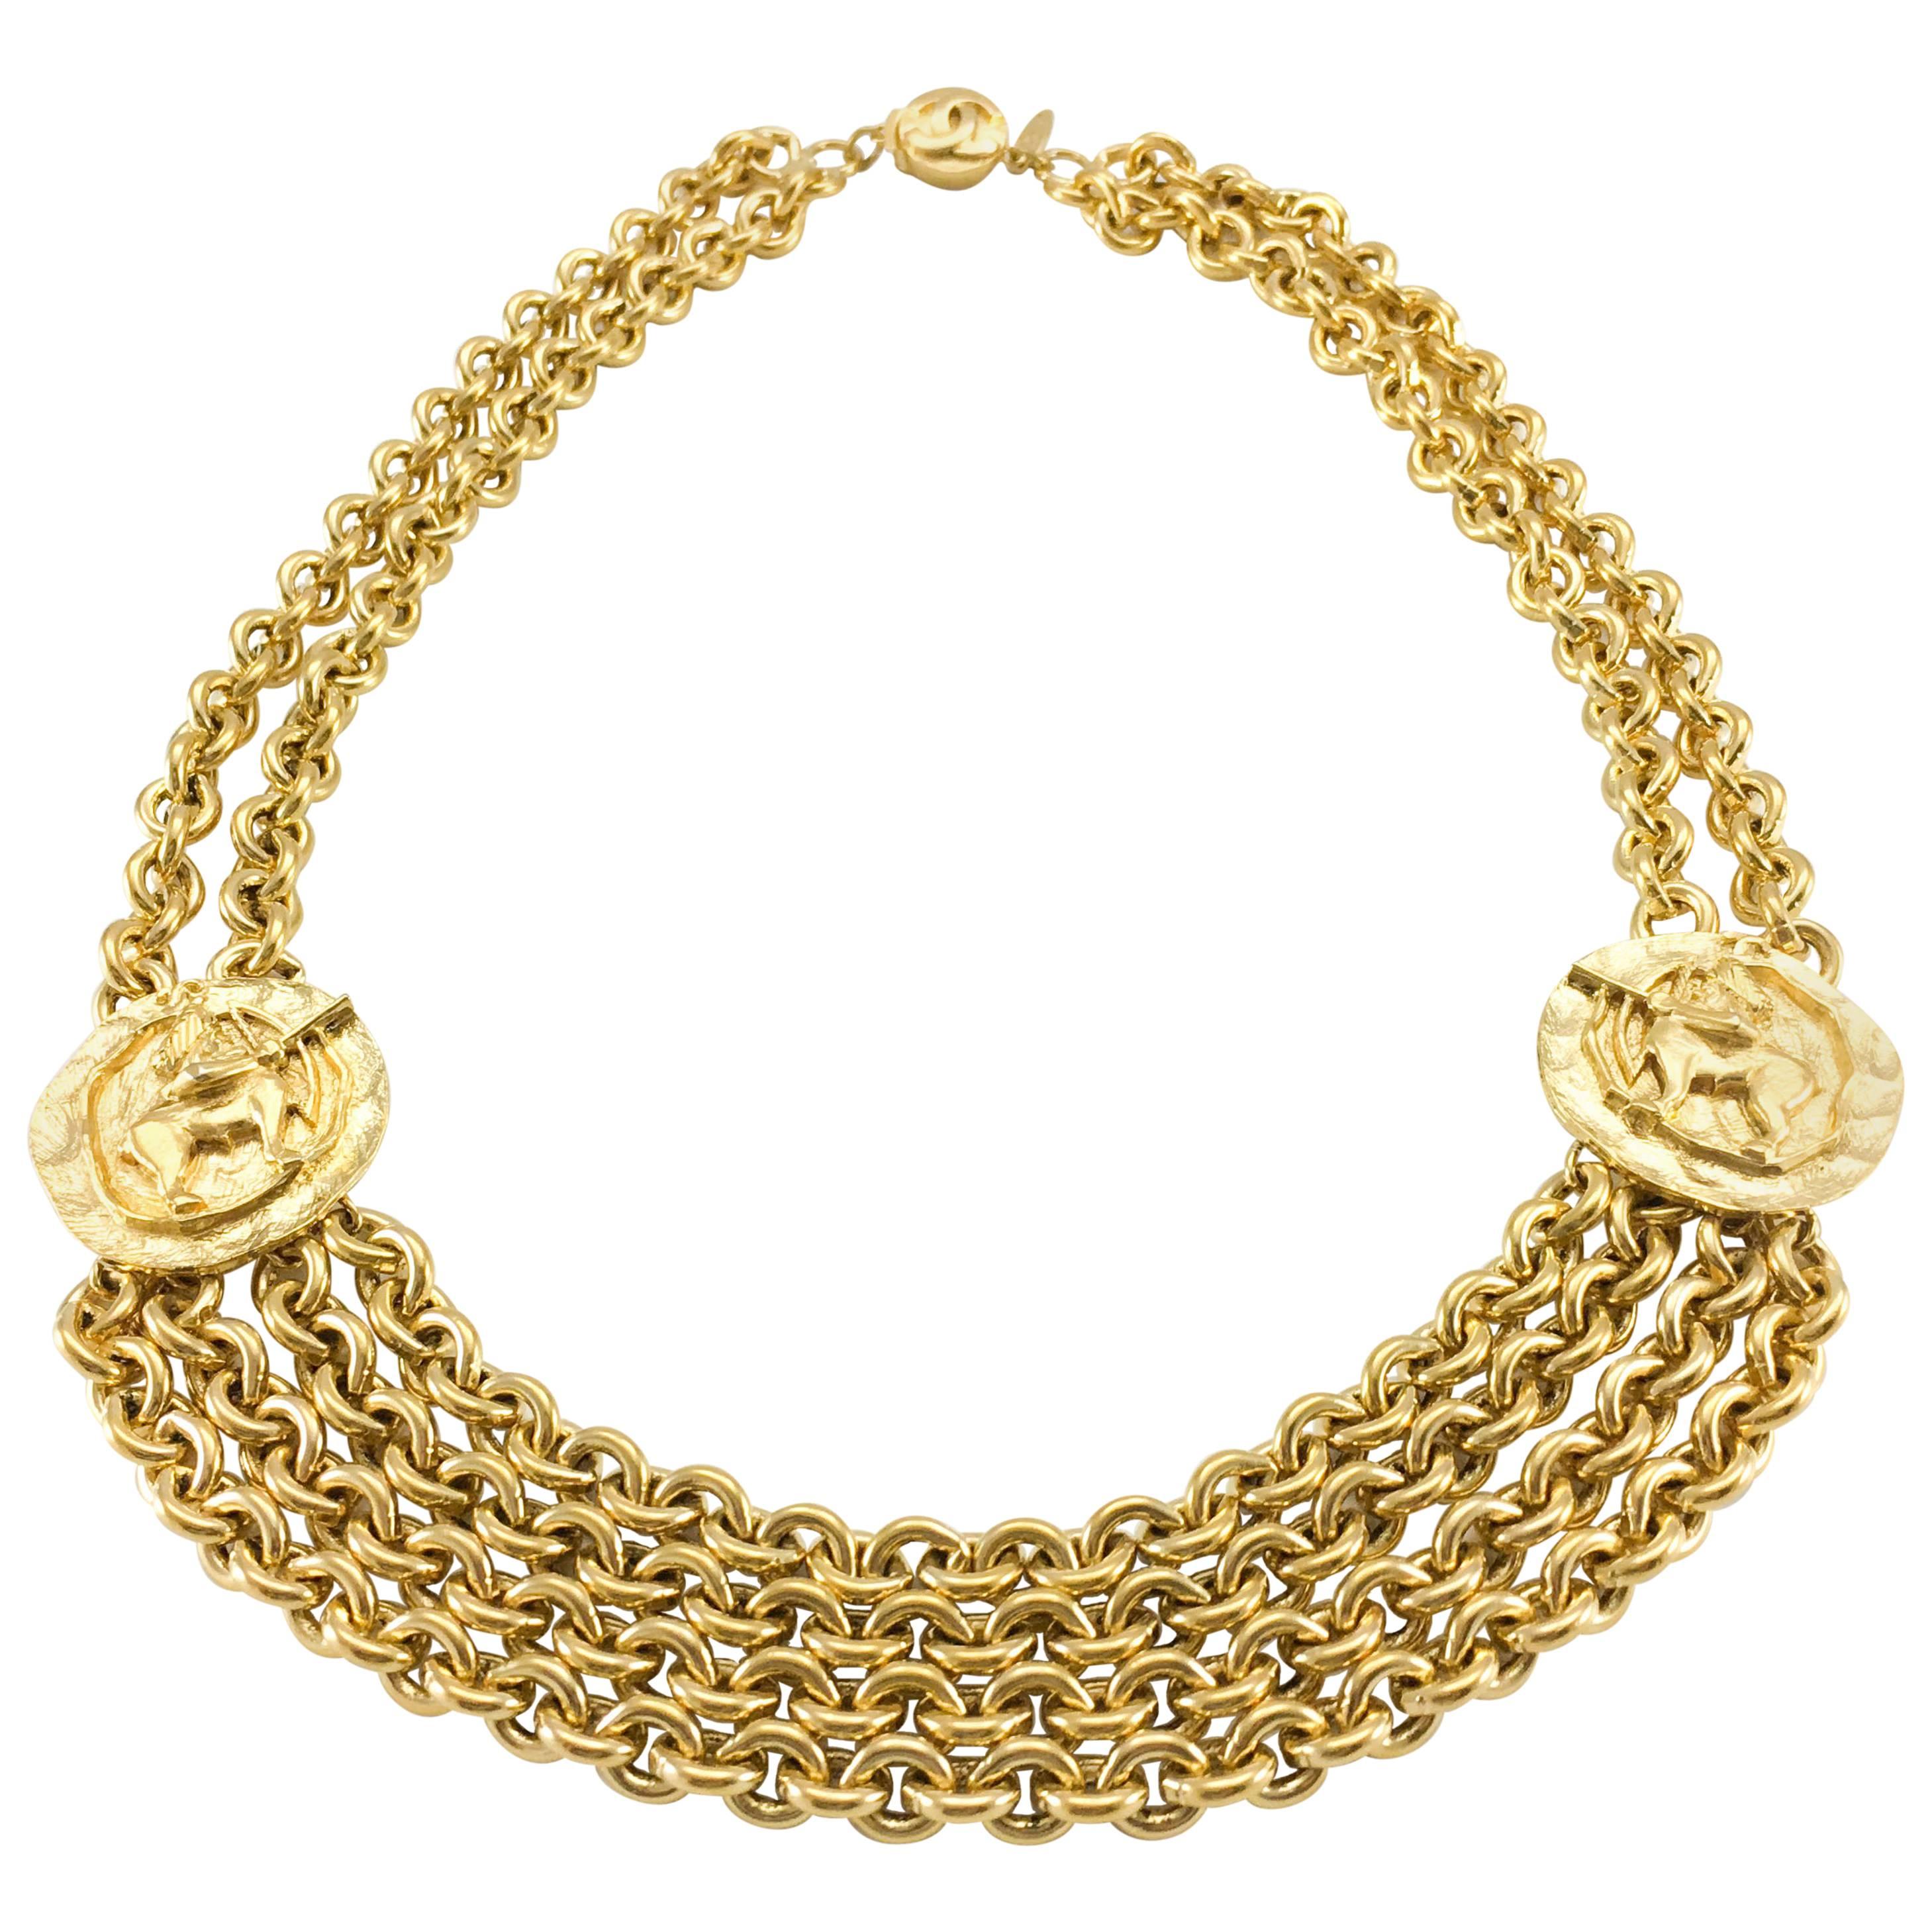 1984 Chanel Centaur Medallion Chain Necklace For Sale